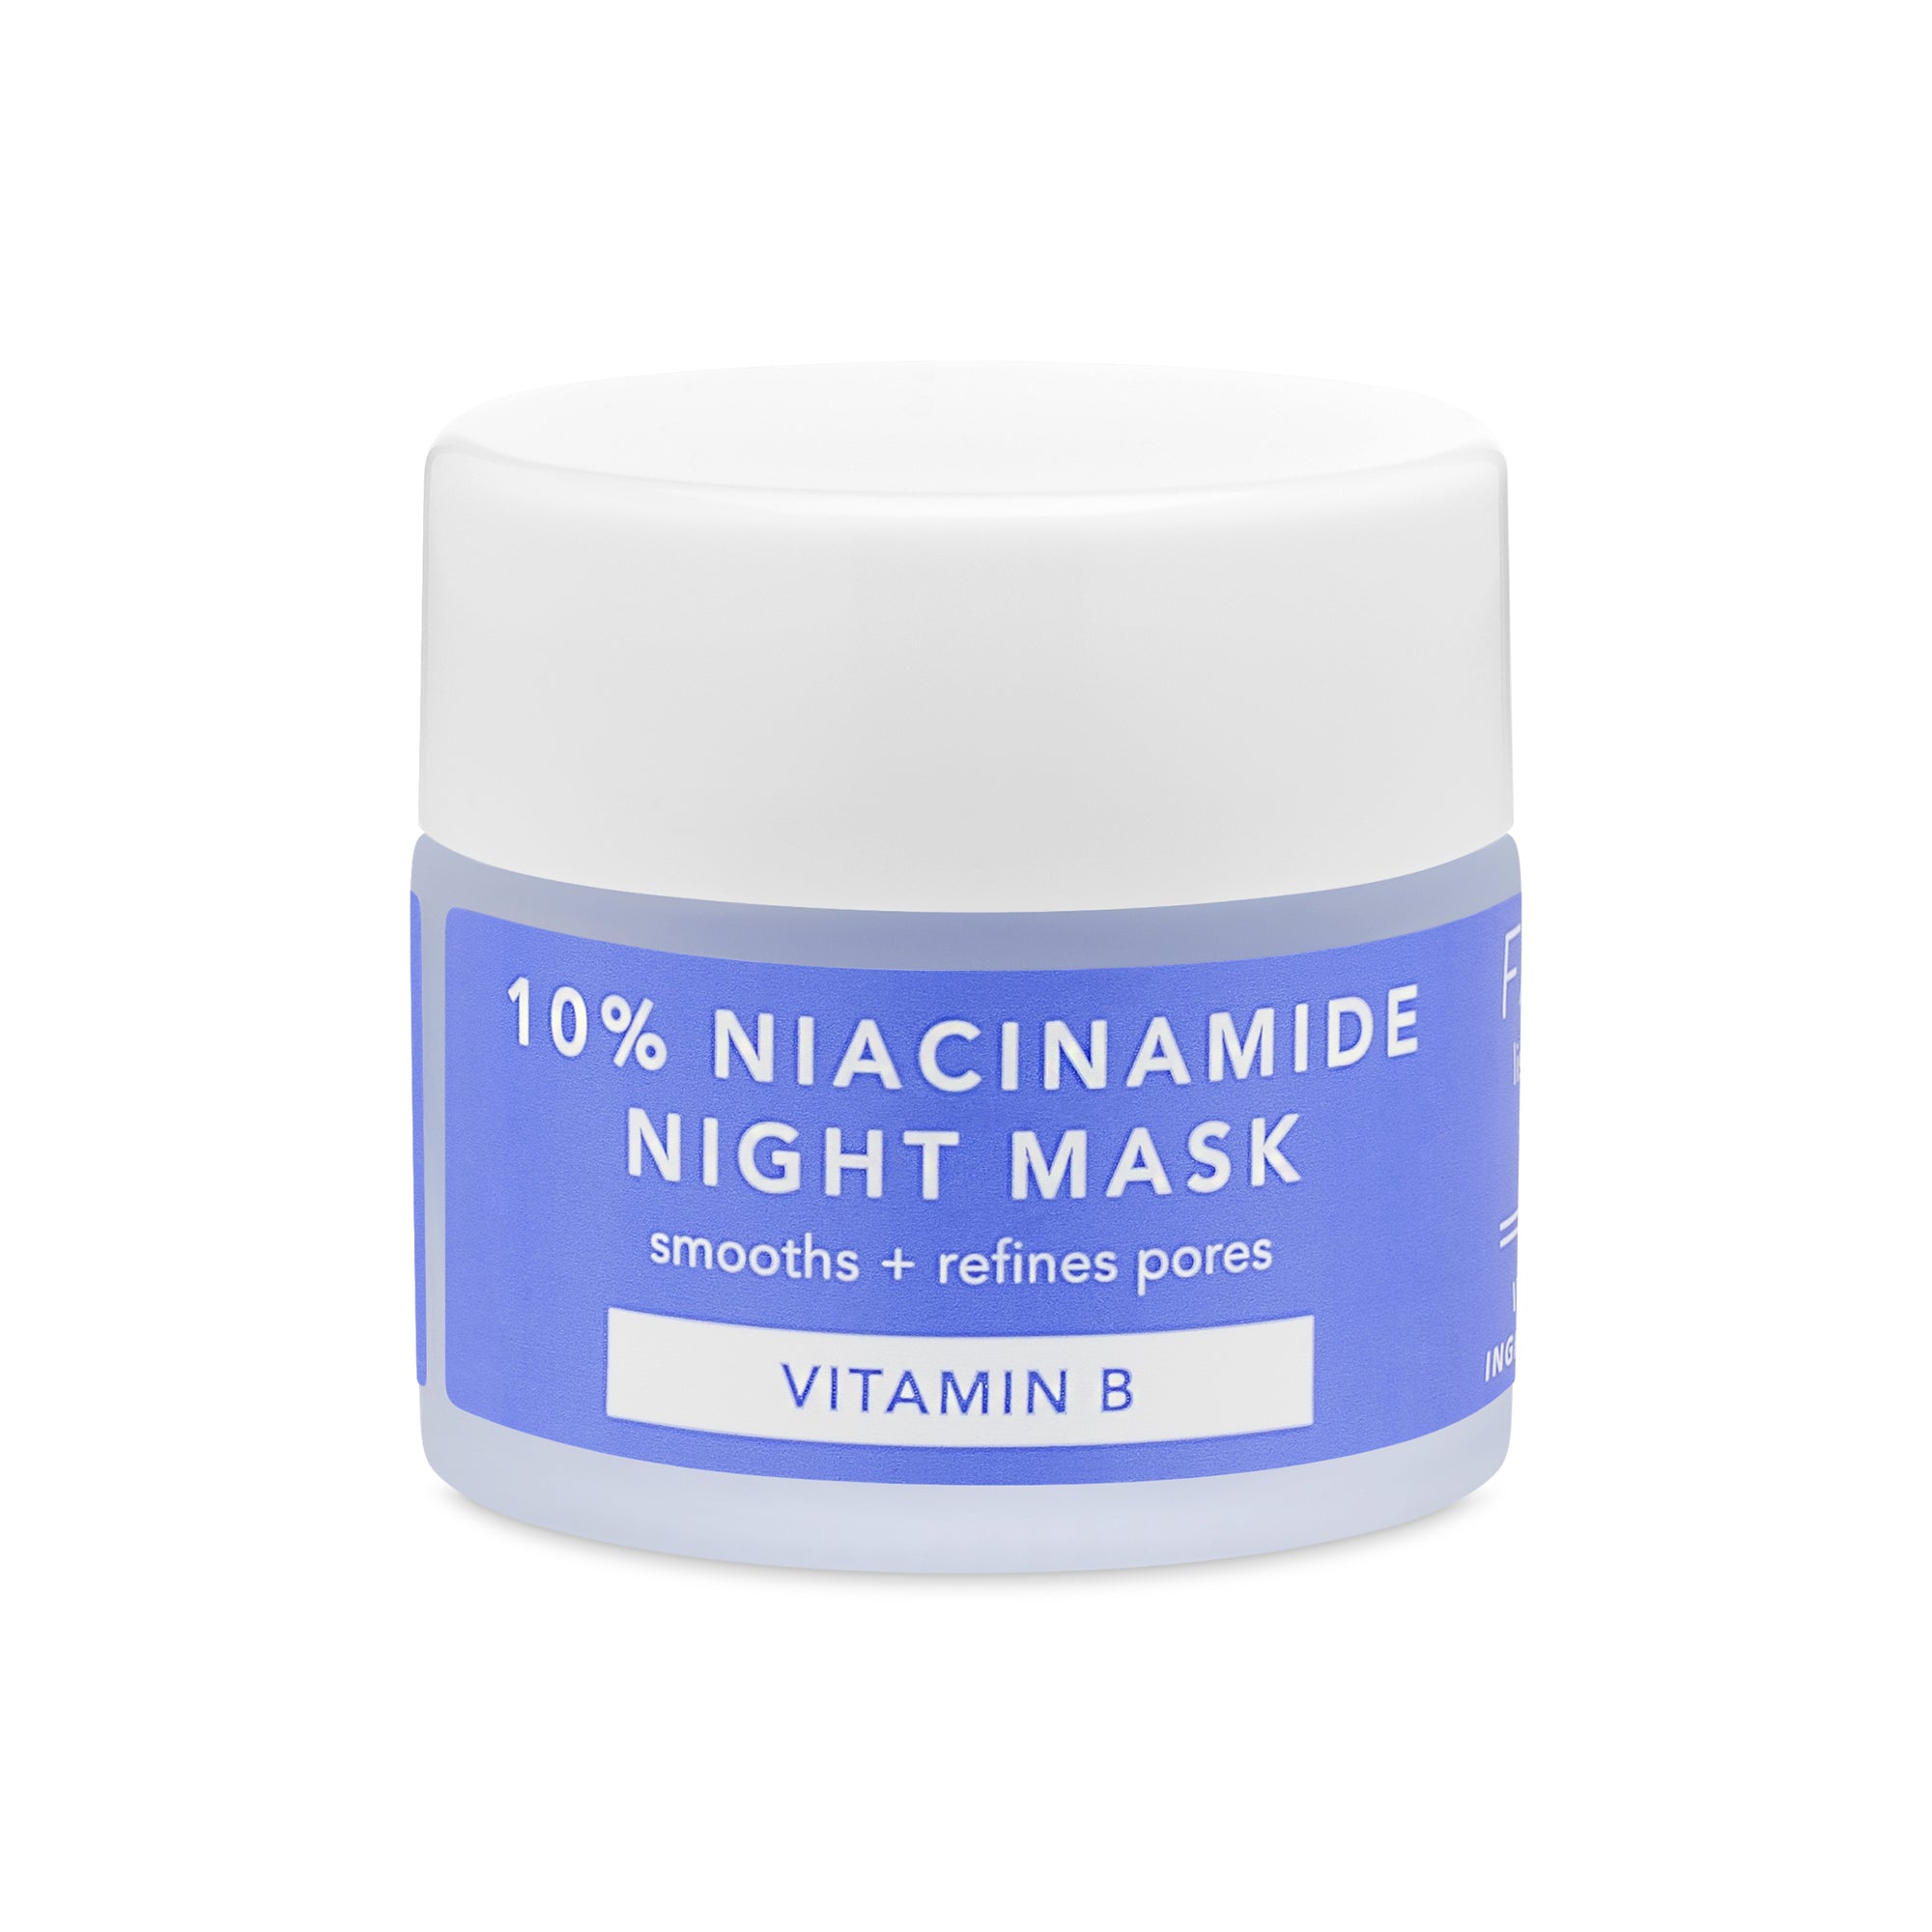 Free 10% Niacinamide Night Mask Trial Size